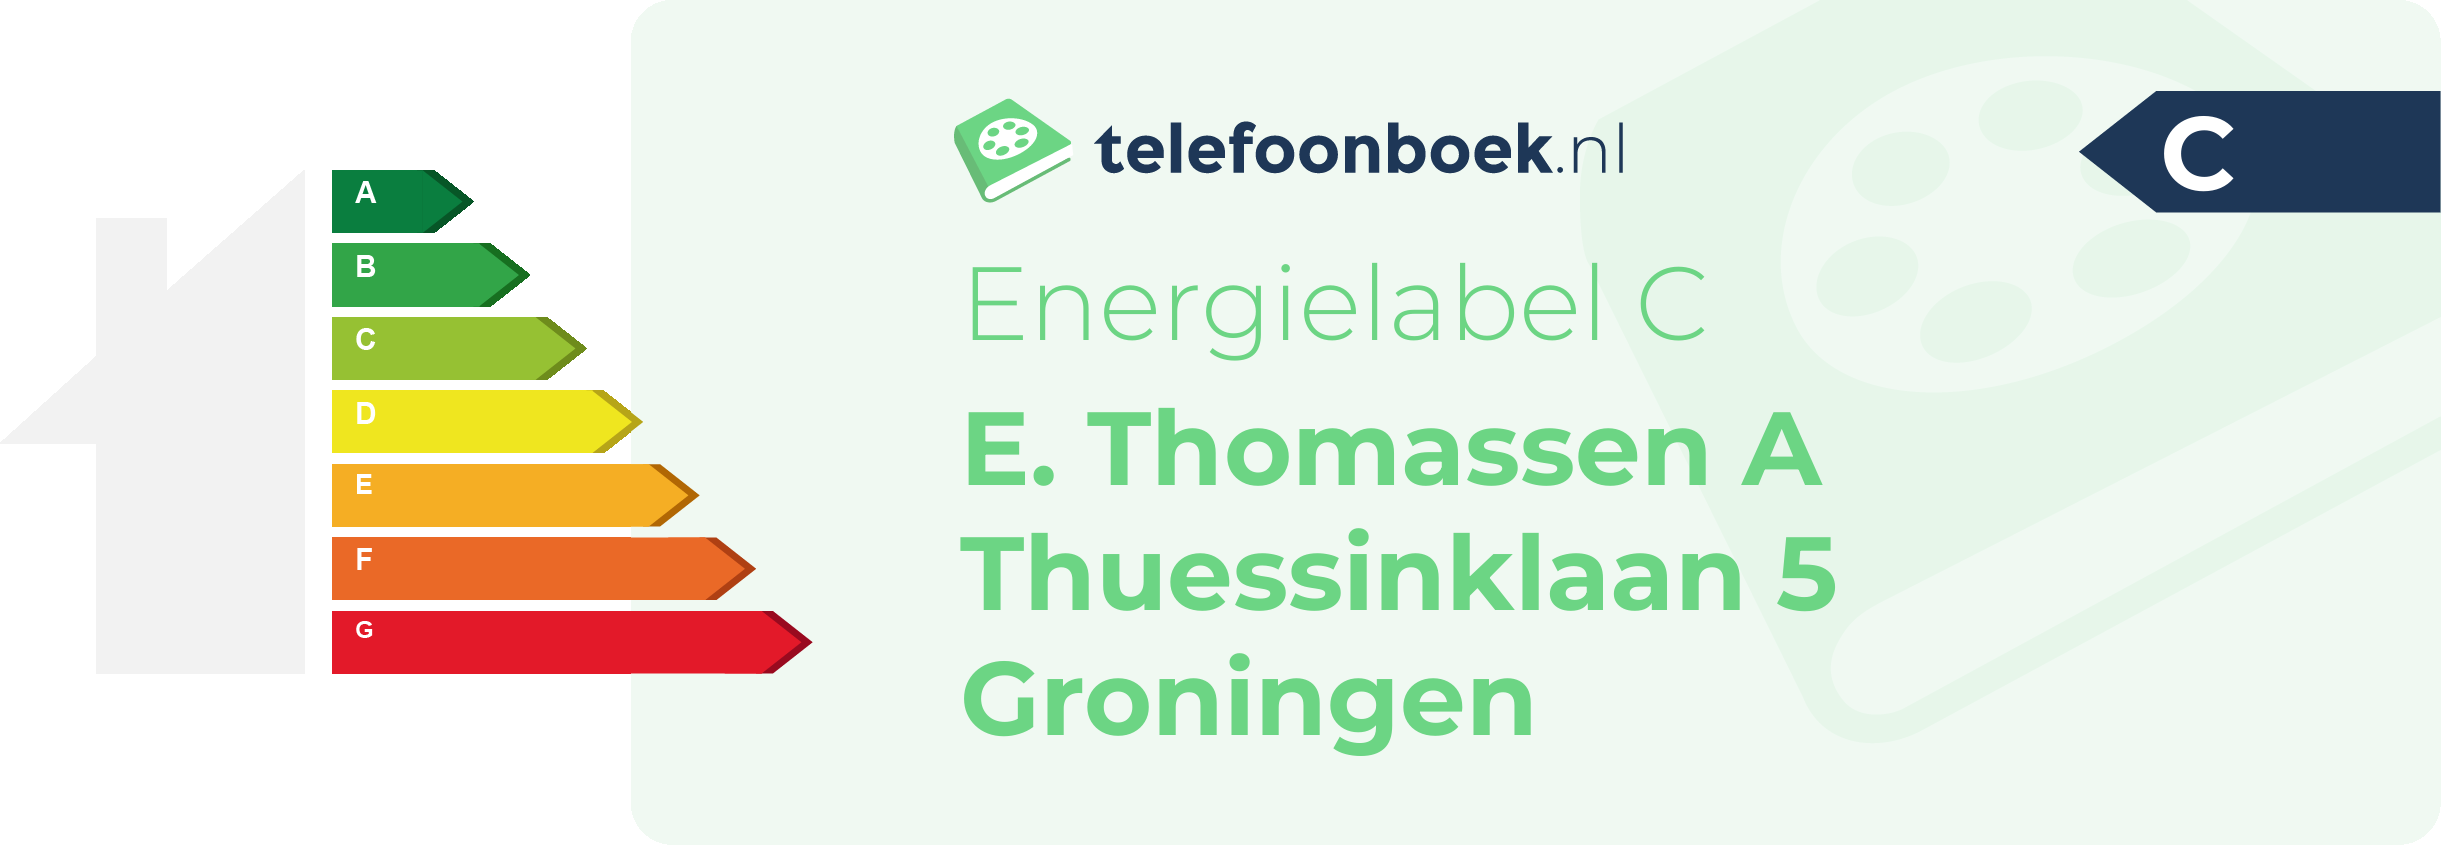 Energielabel E. Thomassen A Thuessinklaan 5 Groningen